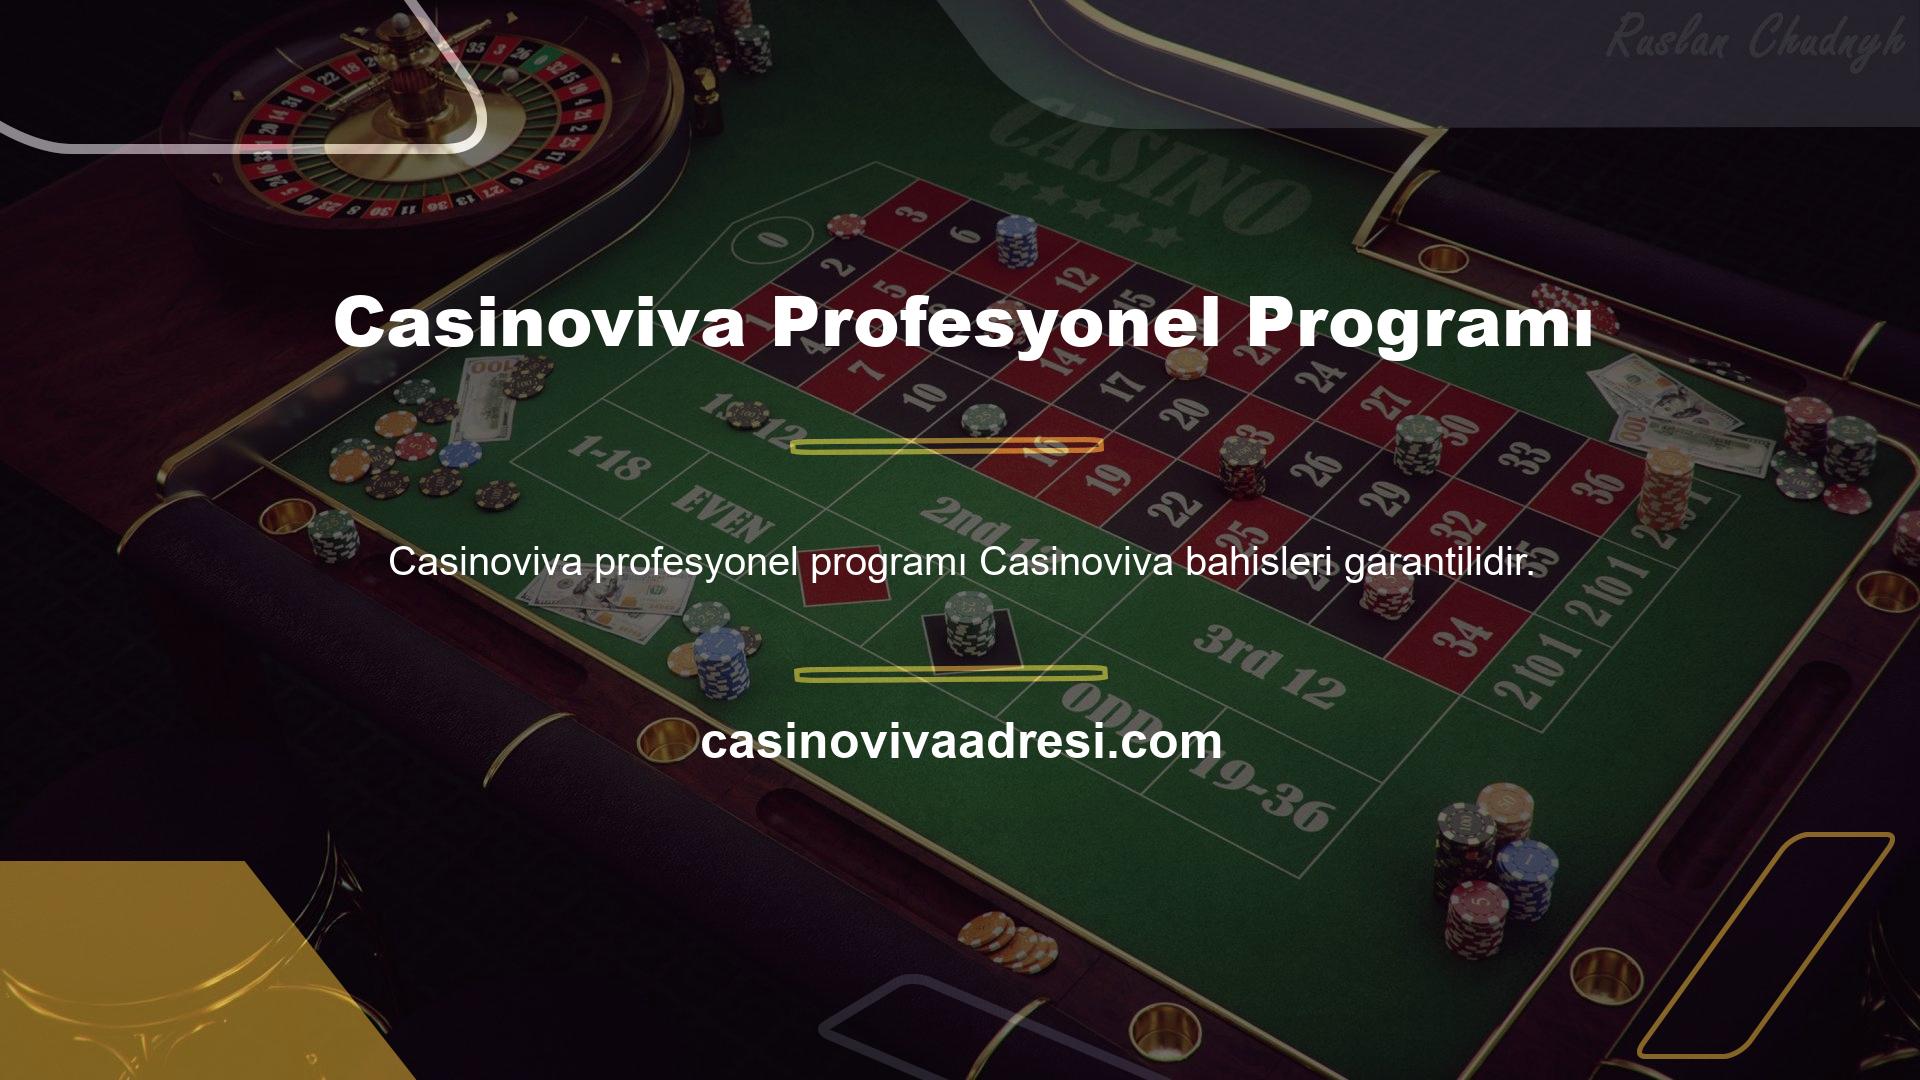 Casinoviva profesyonel programı